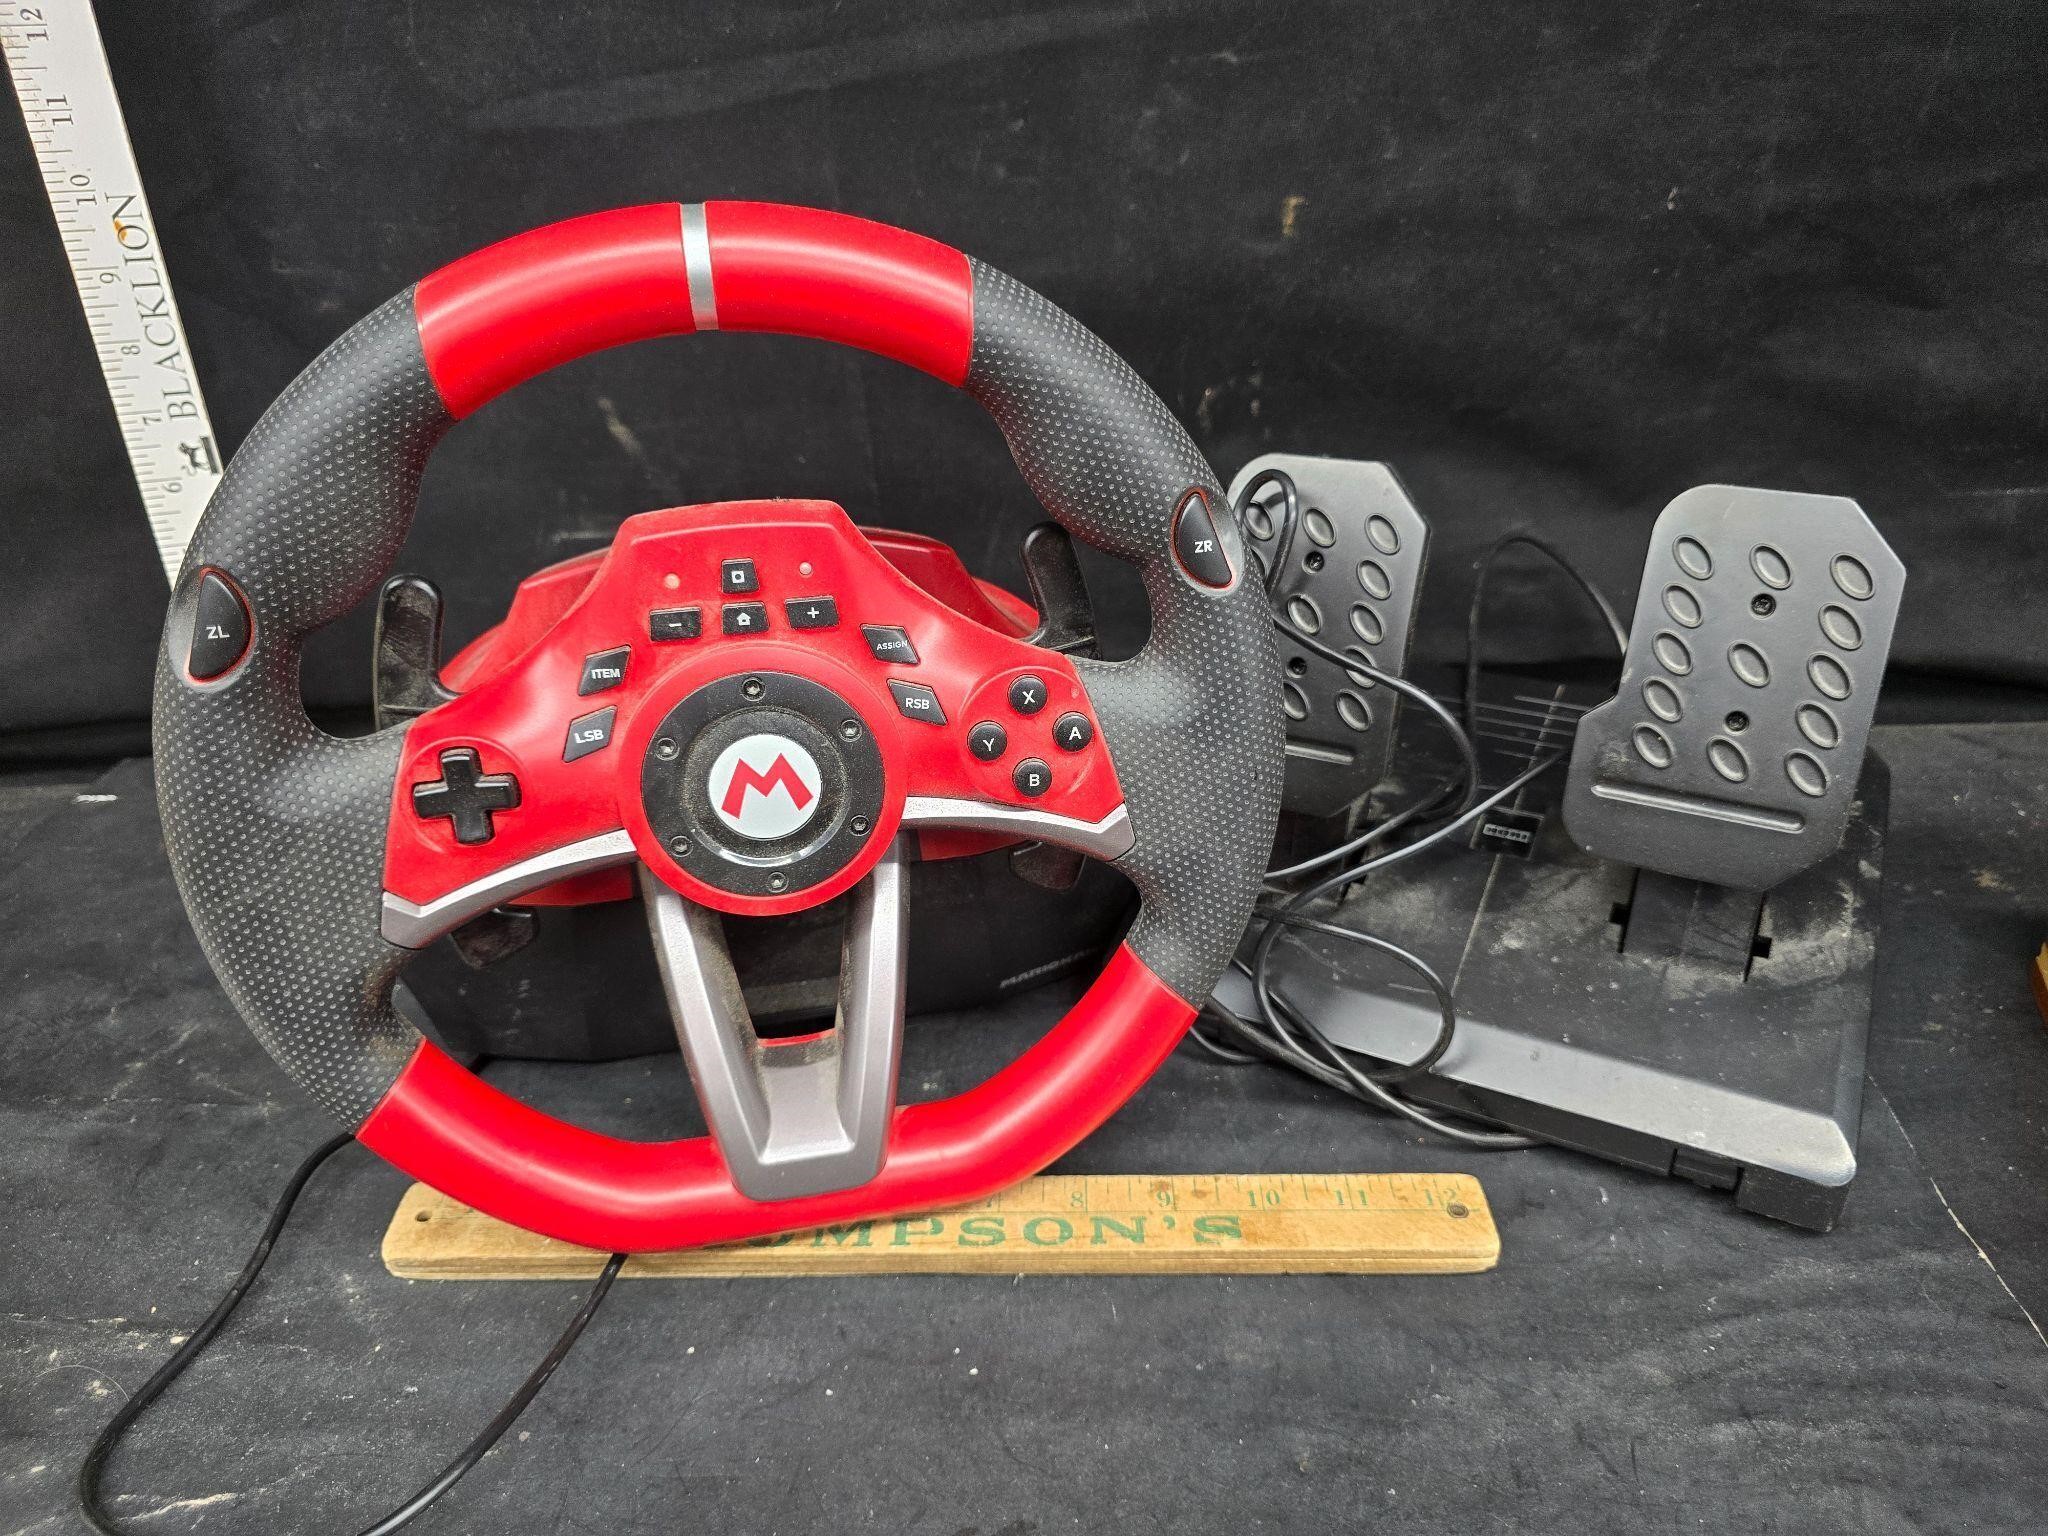 Mario Kart controls